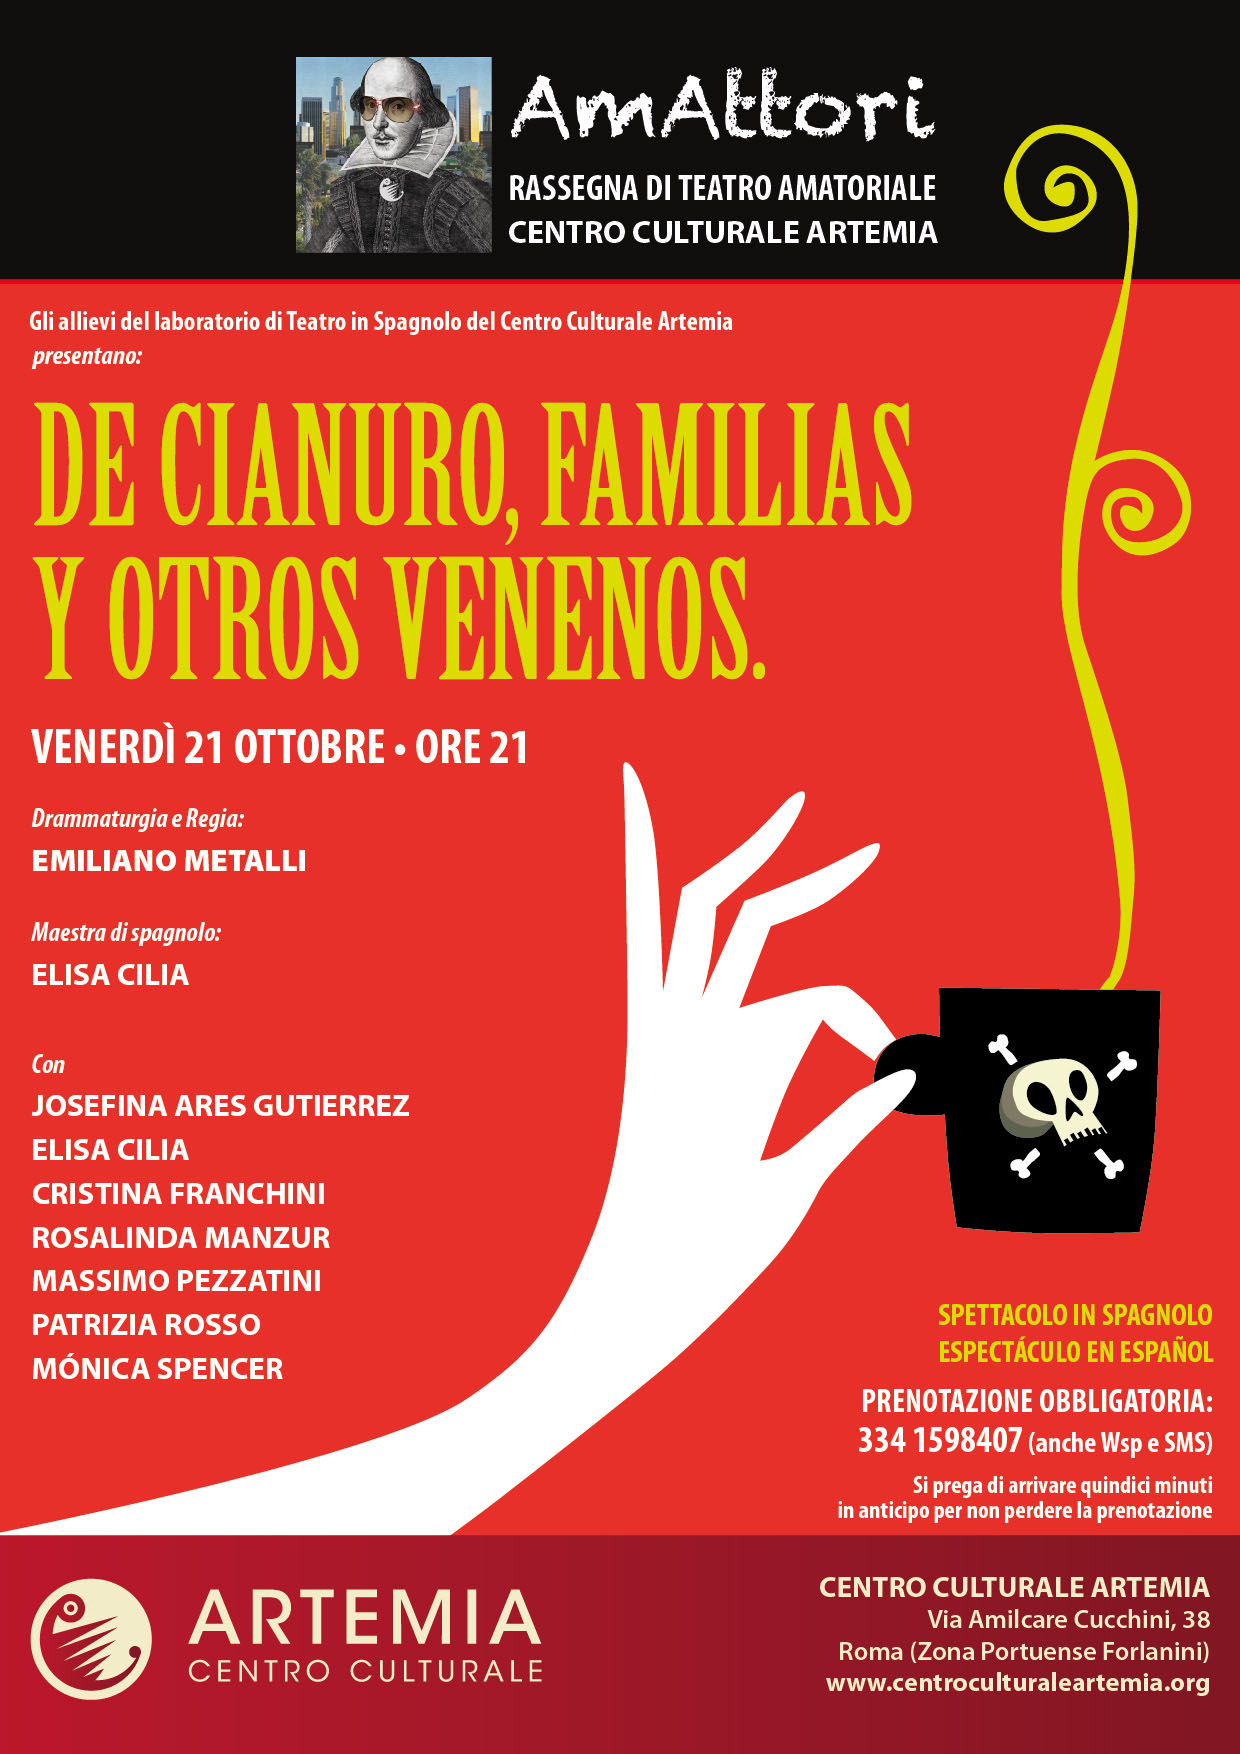 De Cianuro, Familias y Otros Venenos – “AmAttori” Rassegna di Teatro Amatoriale